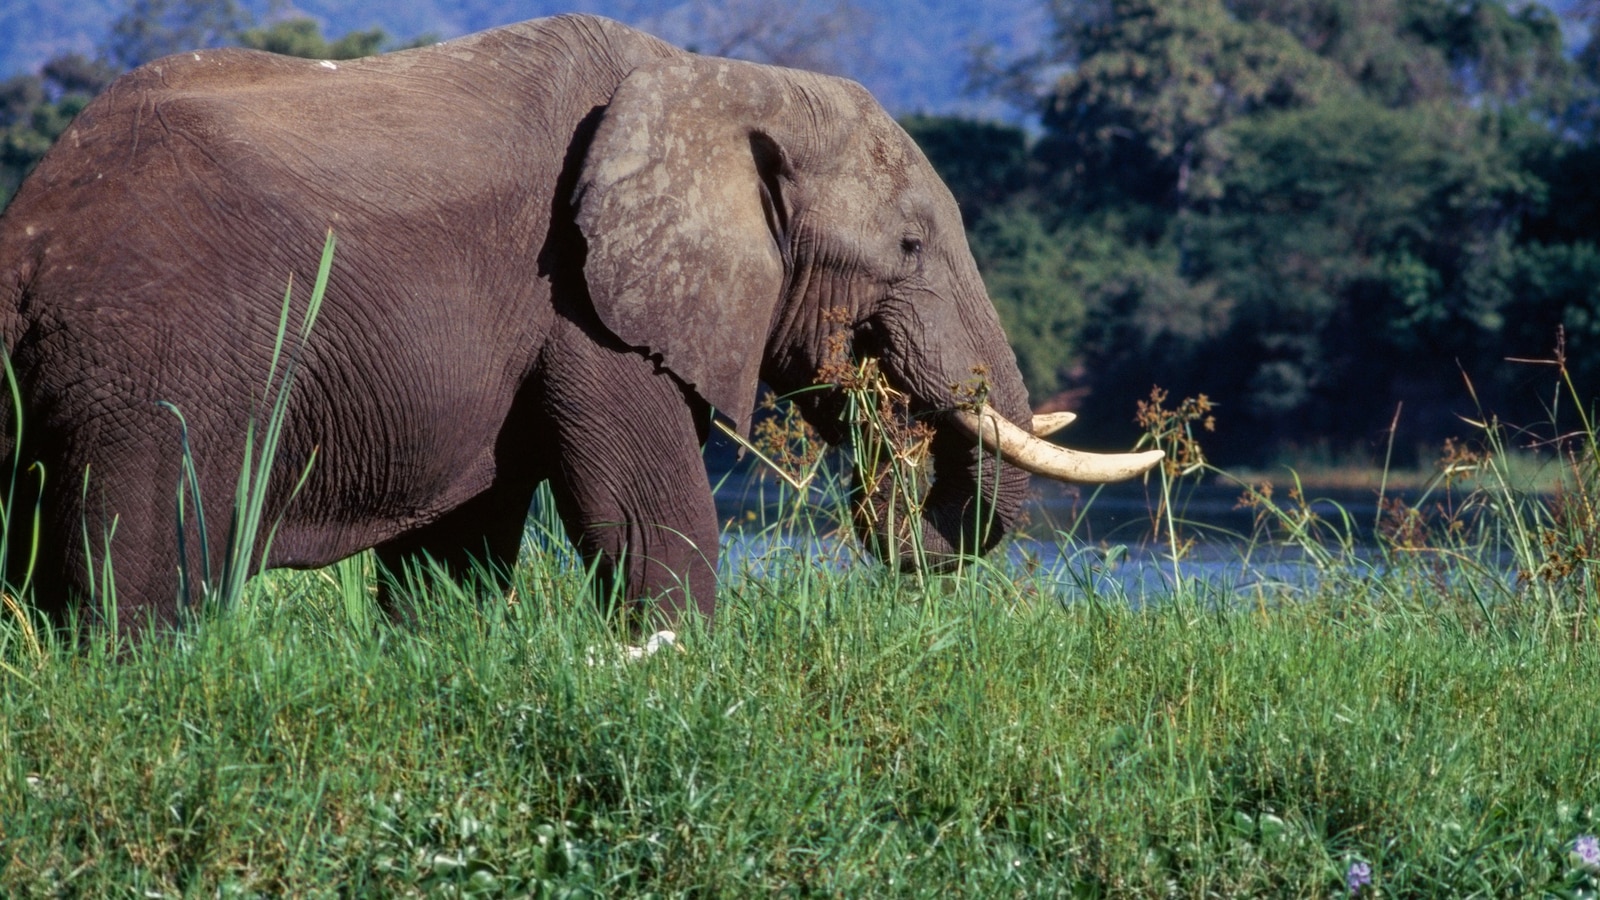 Elderly American tourist killed in elephant attack while on safari in Zambia [Video]